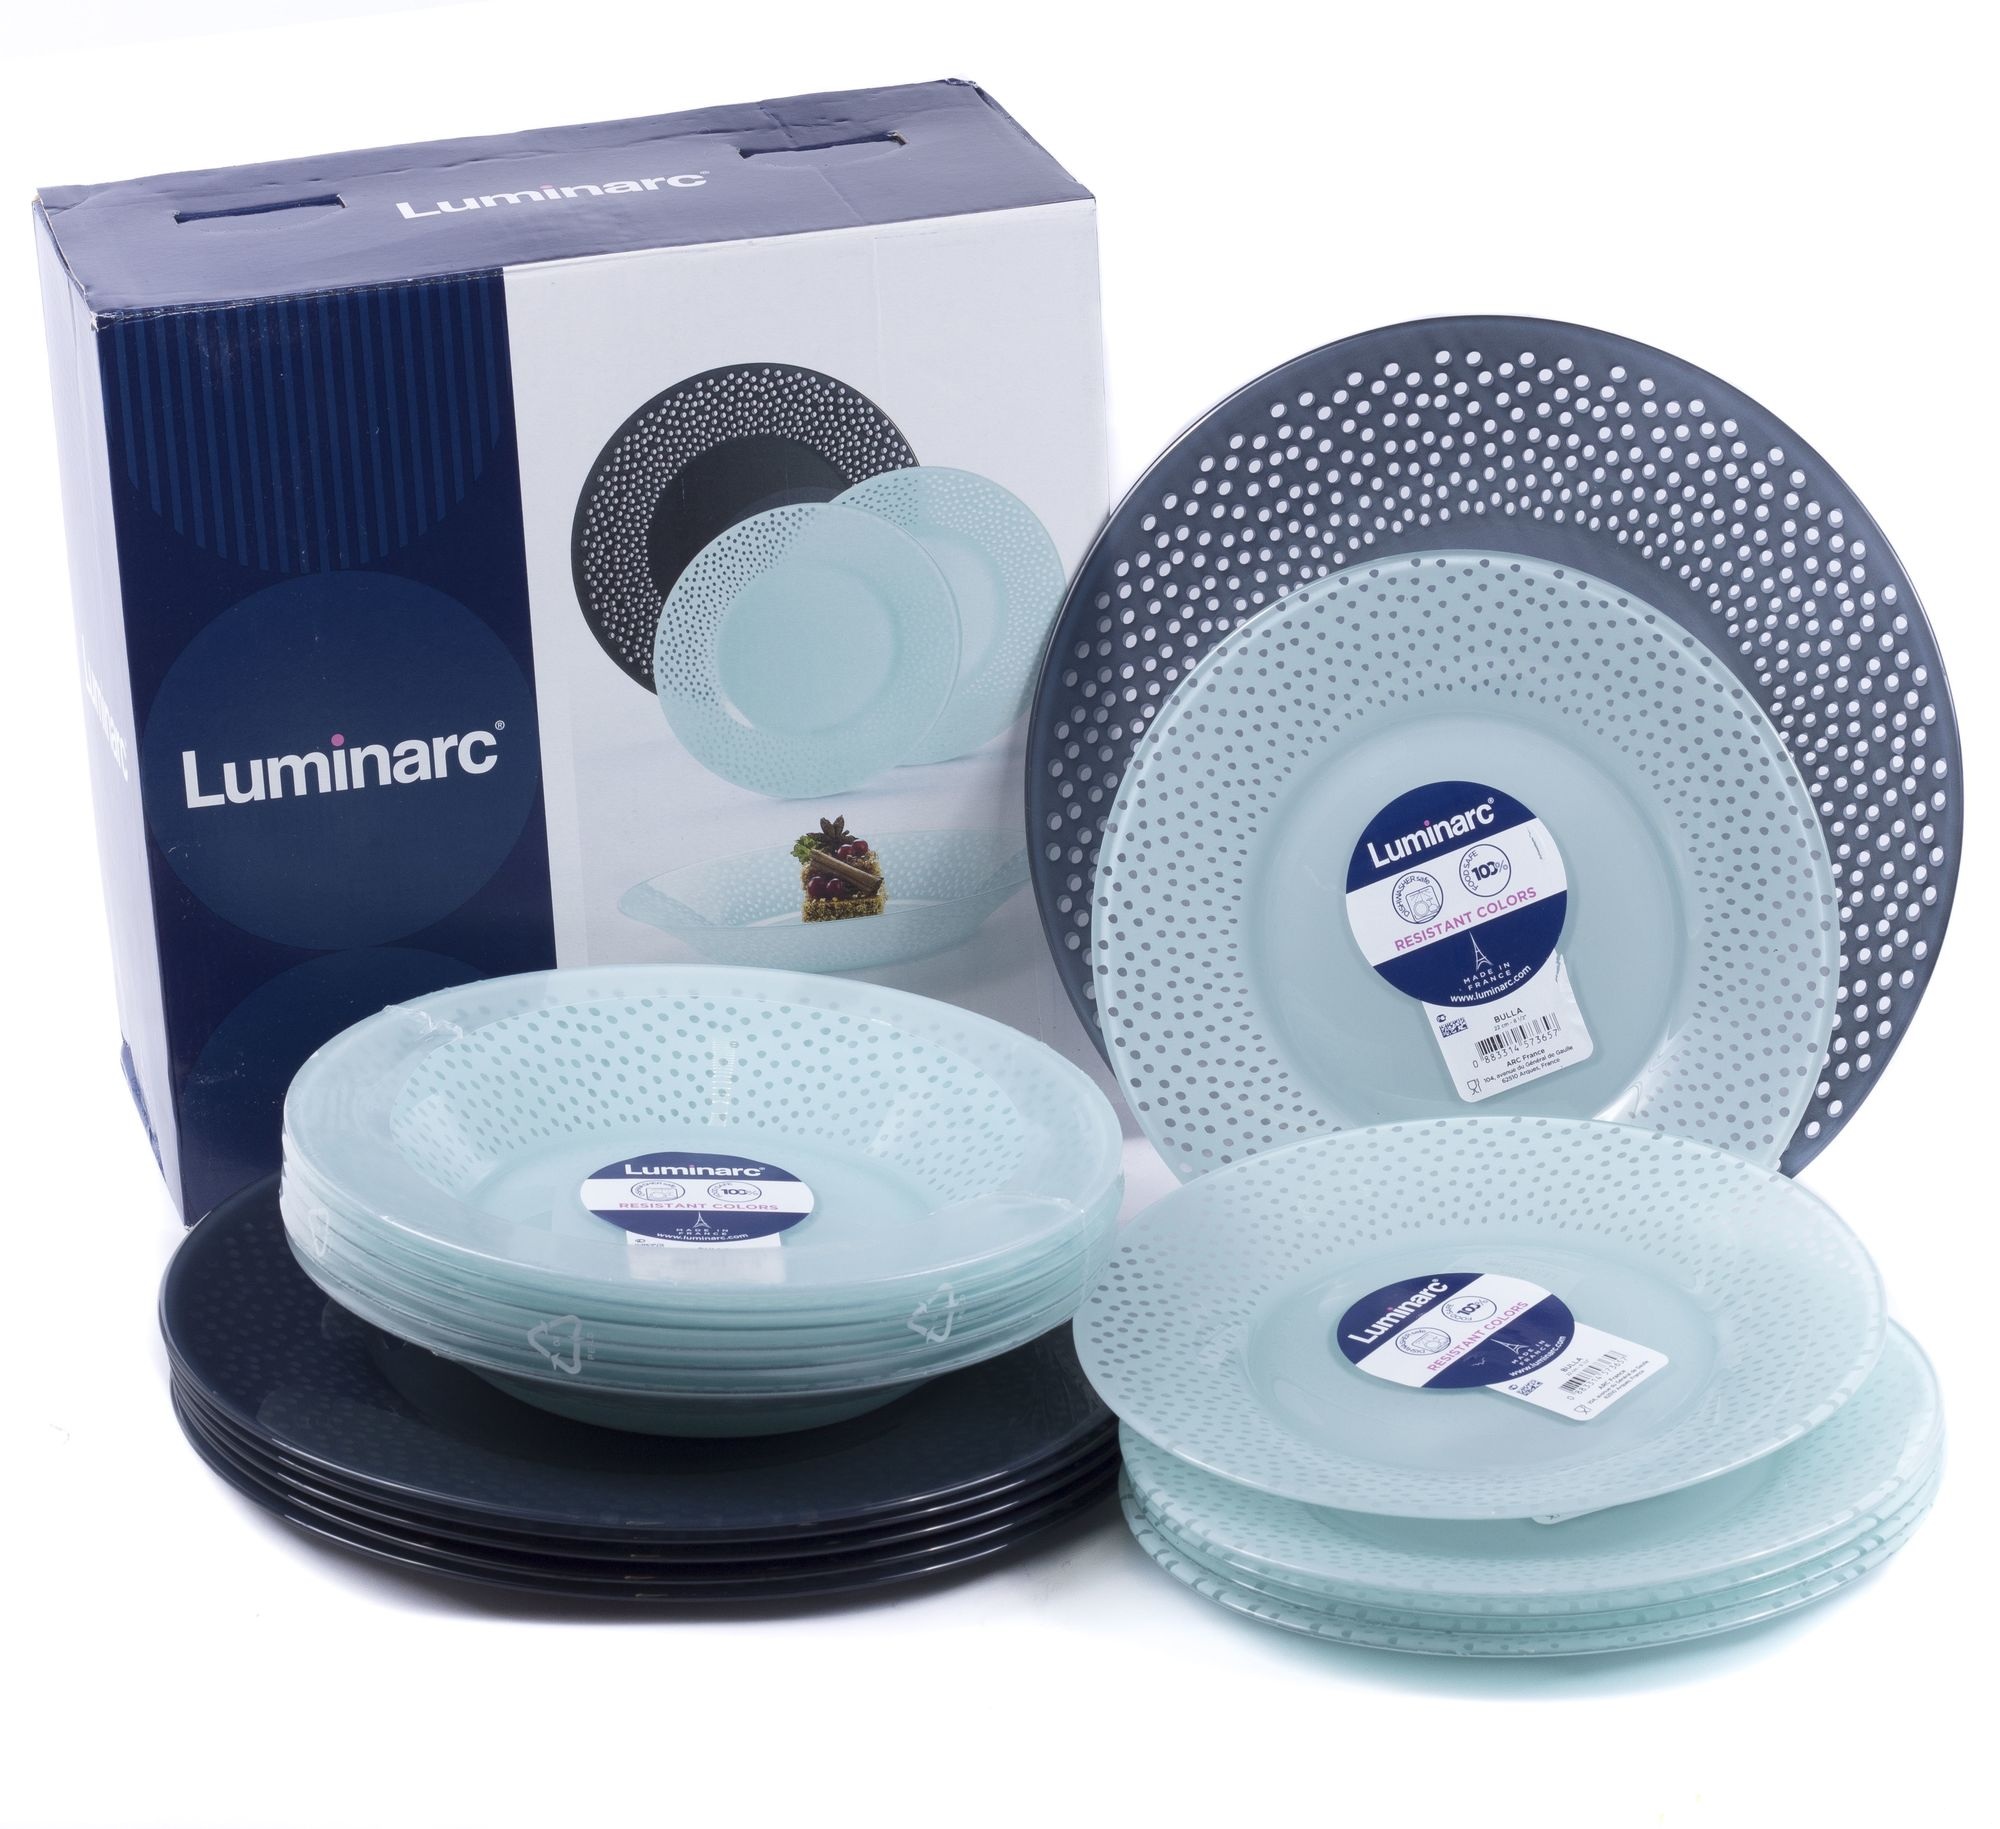 Luminarc N0495 18 Pcs Dinnerware Set Tempered Glass Round Plates Set For 6 791810912514 Ebay 6718